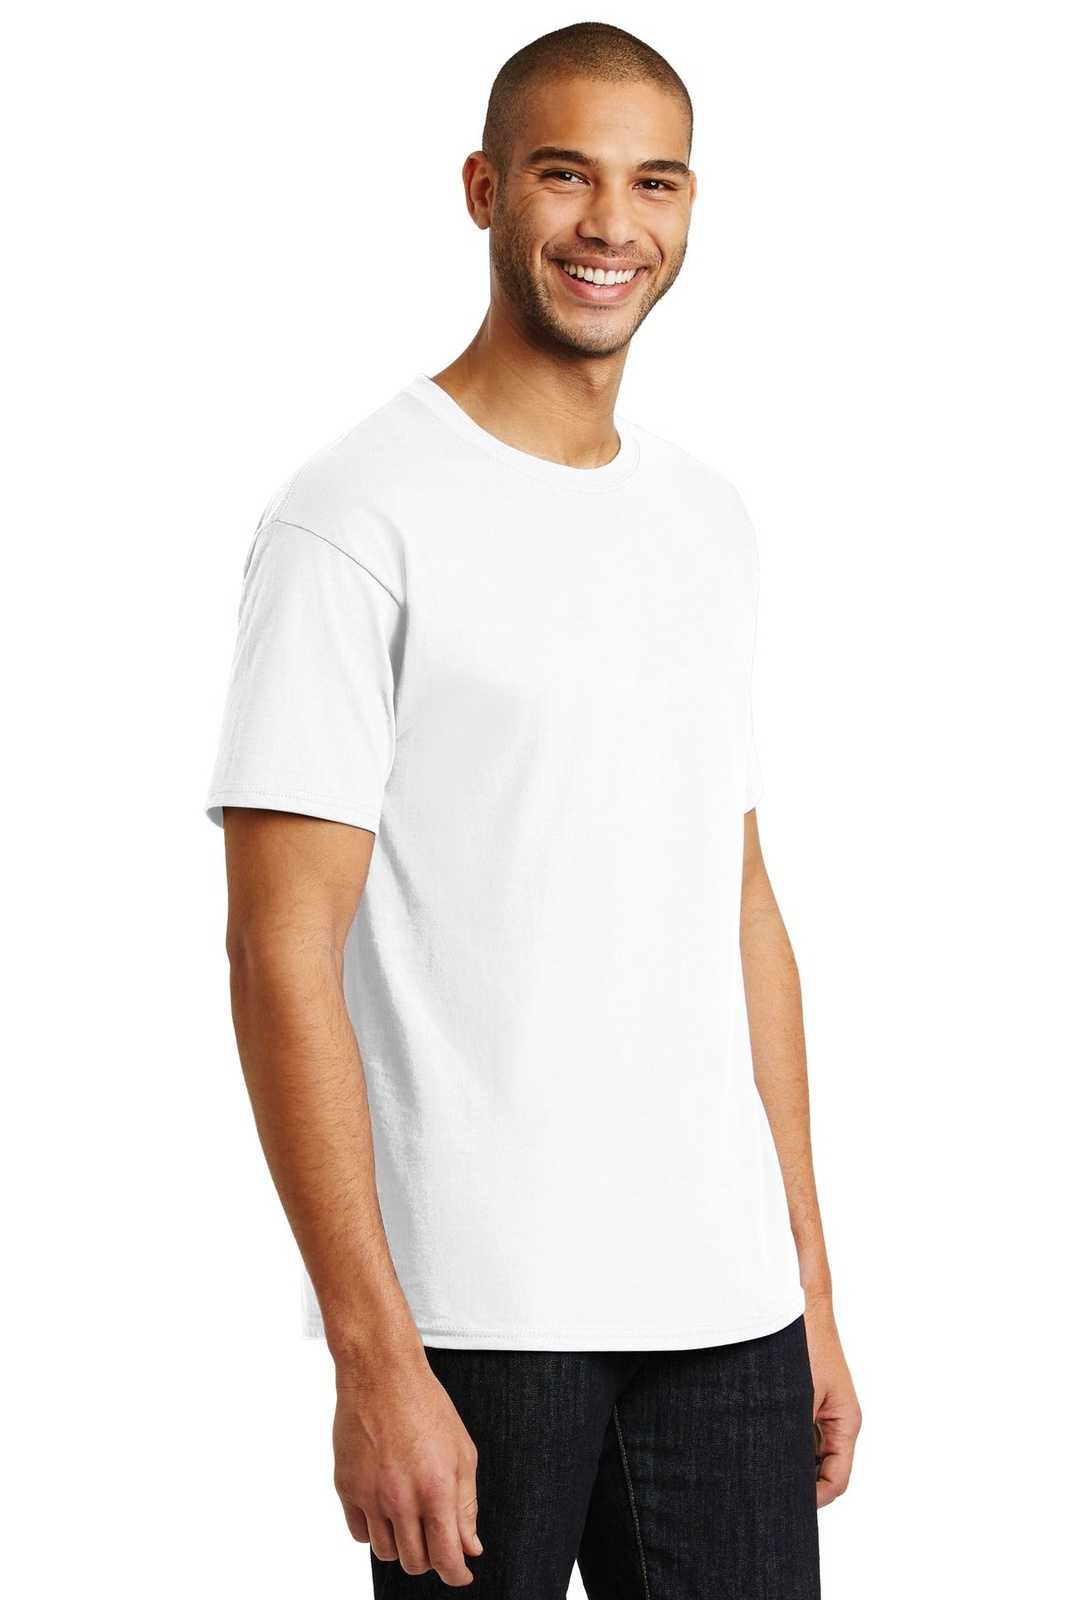 Hanes 5250 Tagless 100% Cotton T-Shirt - White - HIT a Double